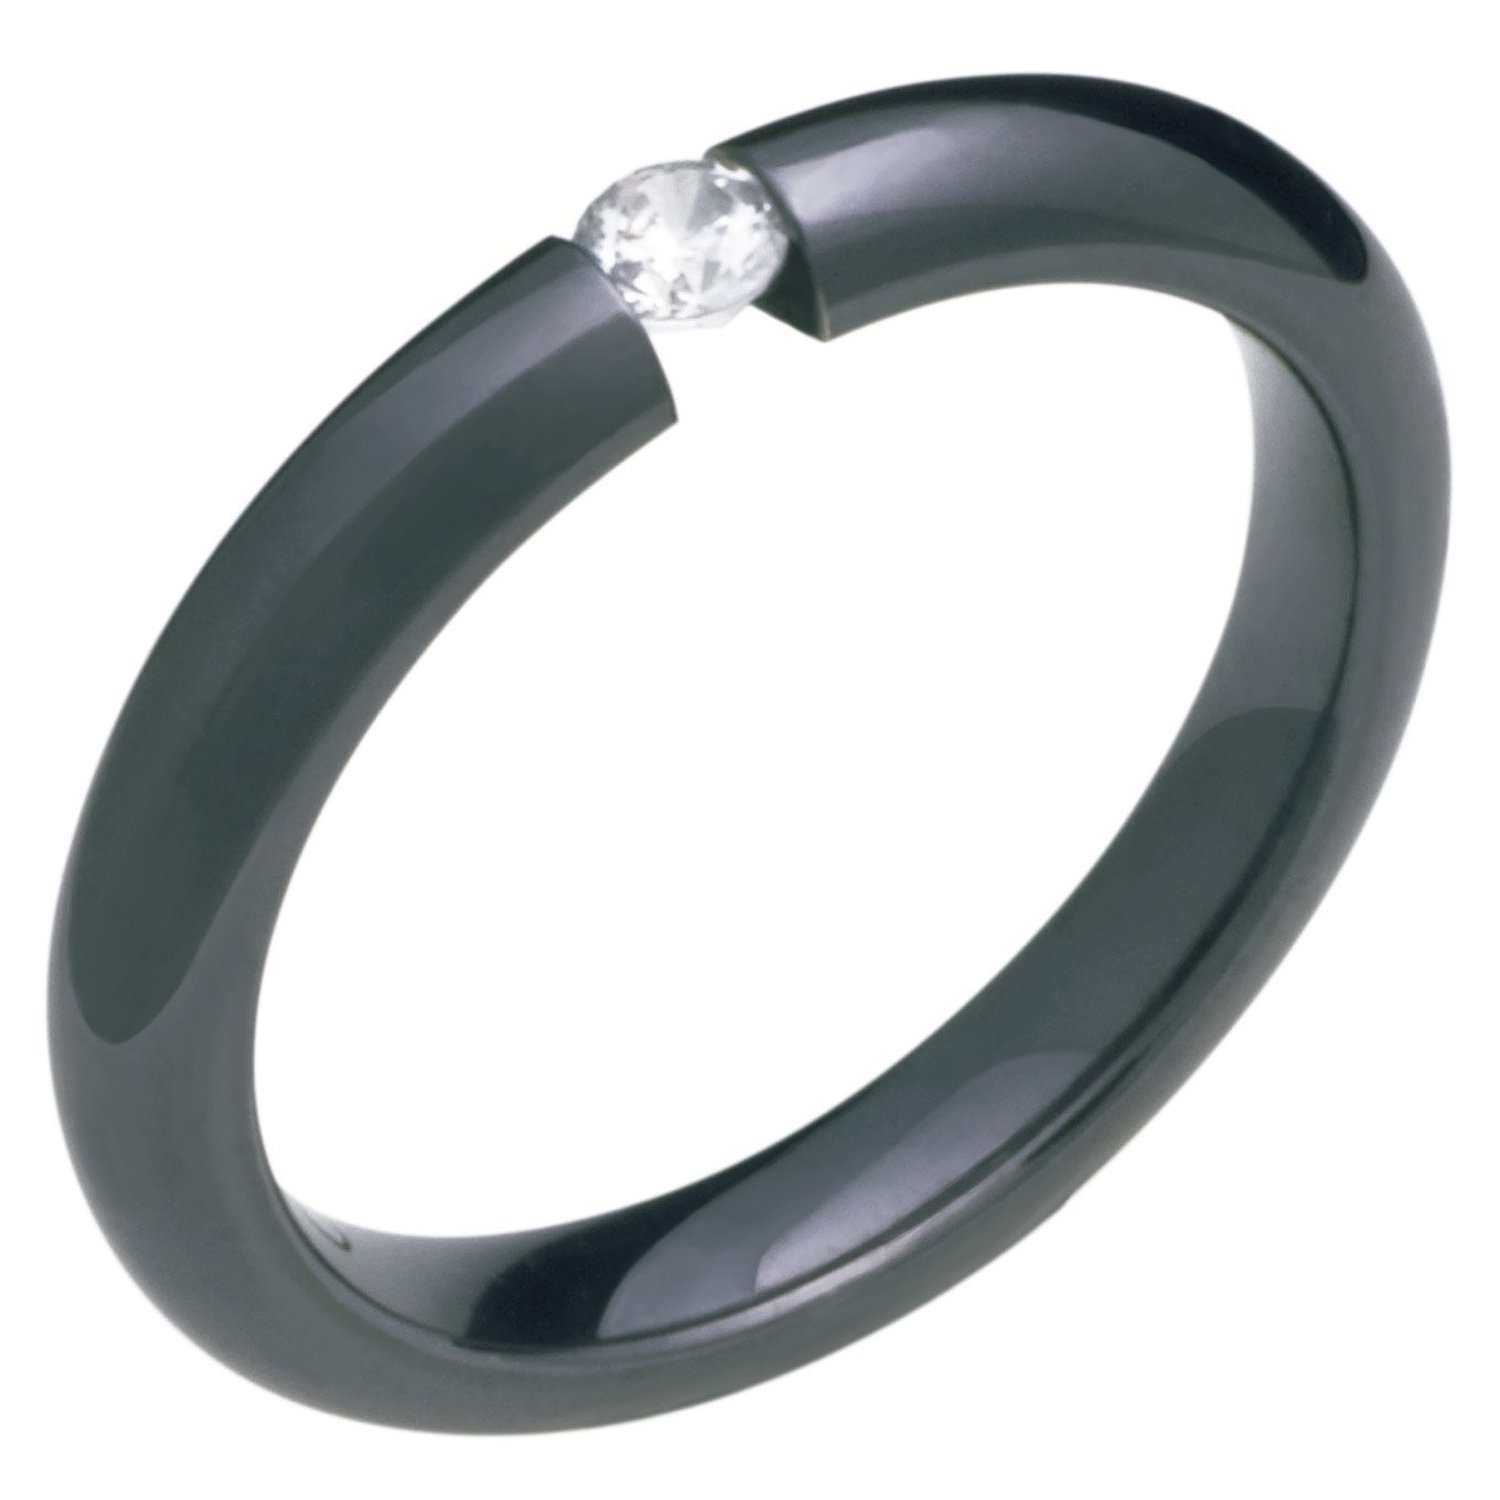 Alain Raphael Stunning Black Titanium Ring With Diamond Tension Set 3mm wide Wedding Band